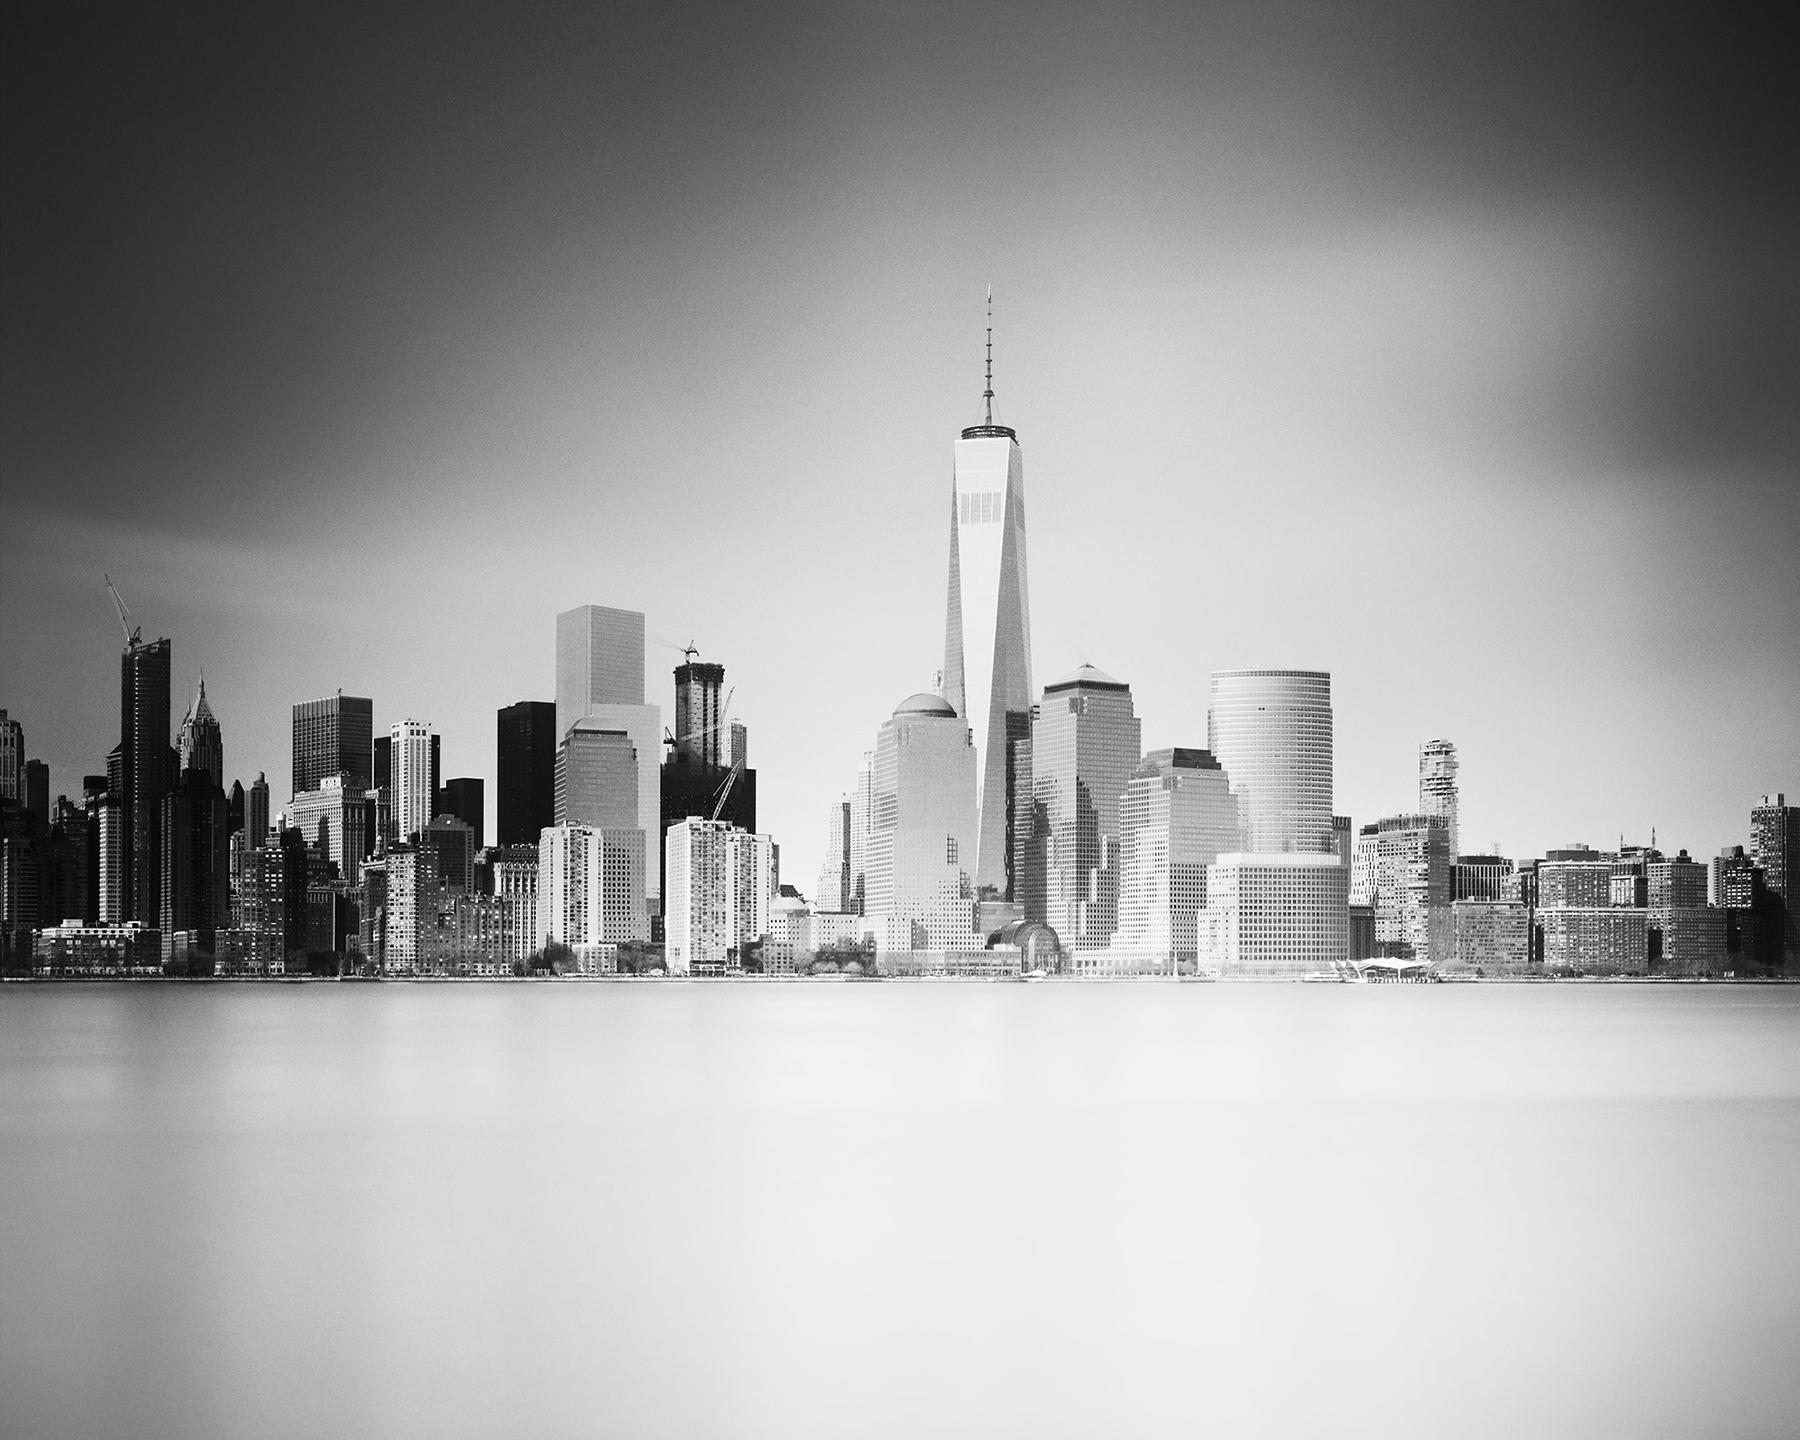 Gerald Berghammer Landscape Photograph - Manhattan Skyline, Sunset, New York City, USA, black and white art photography